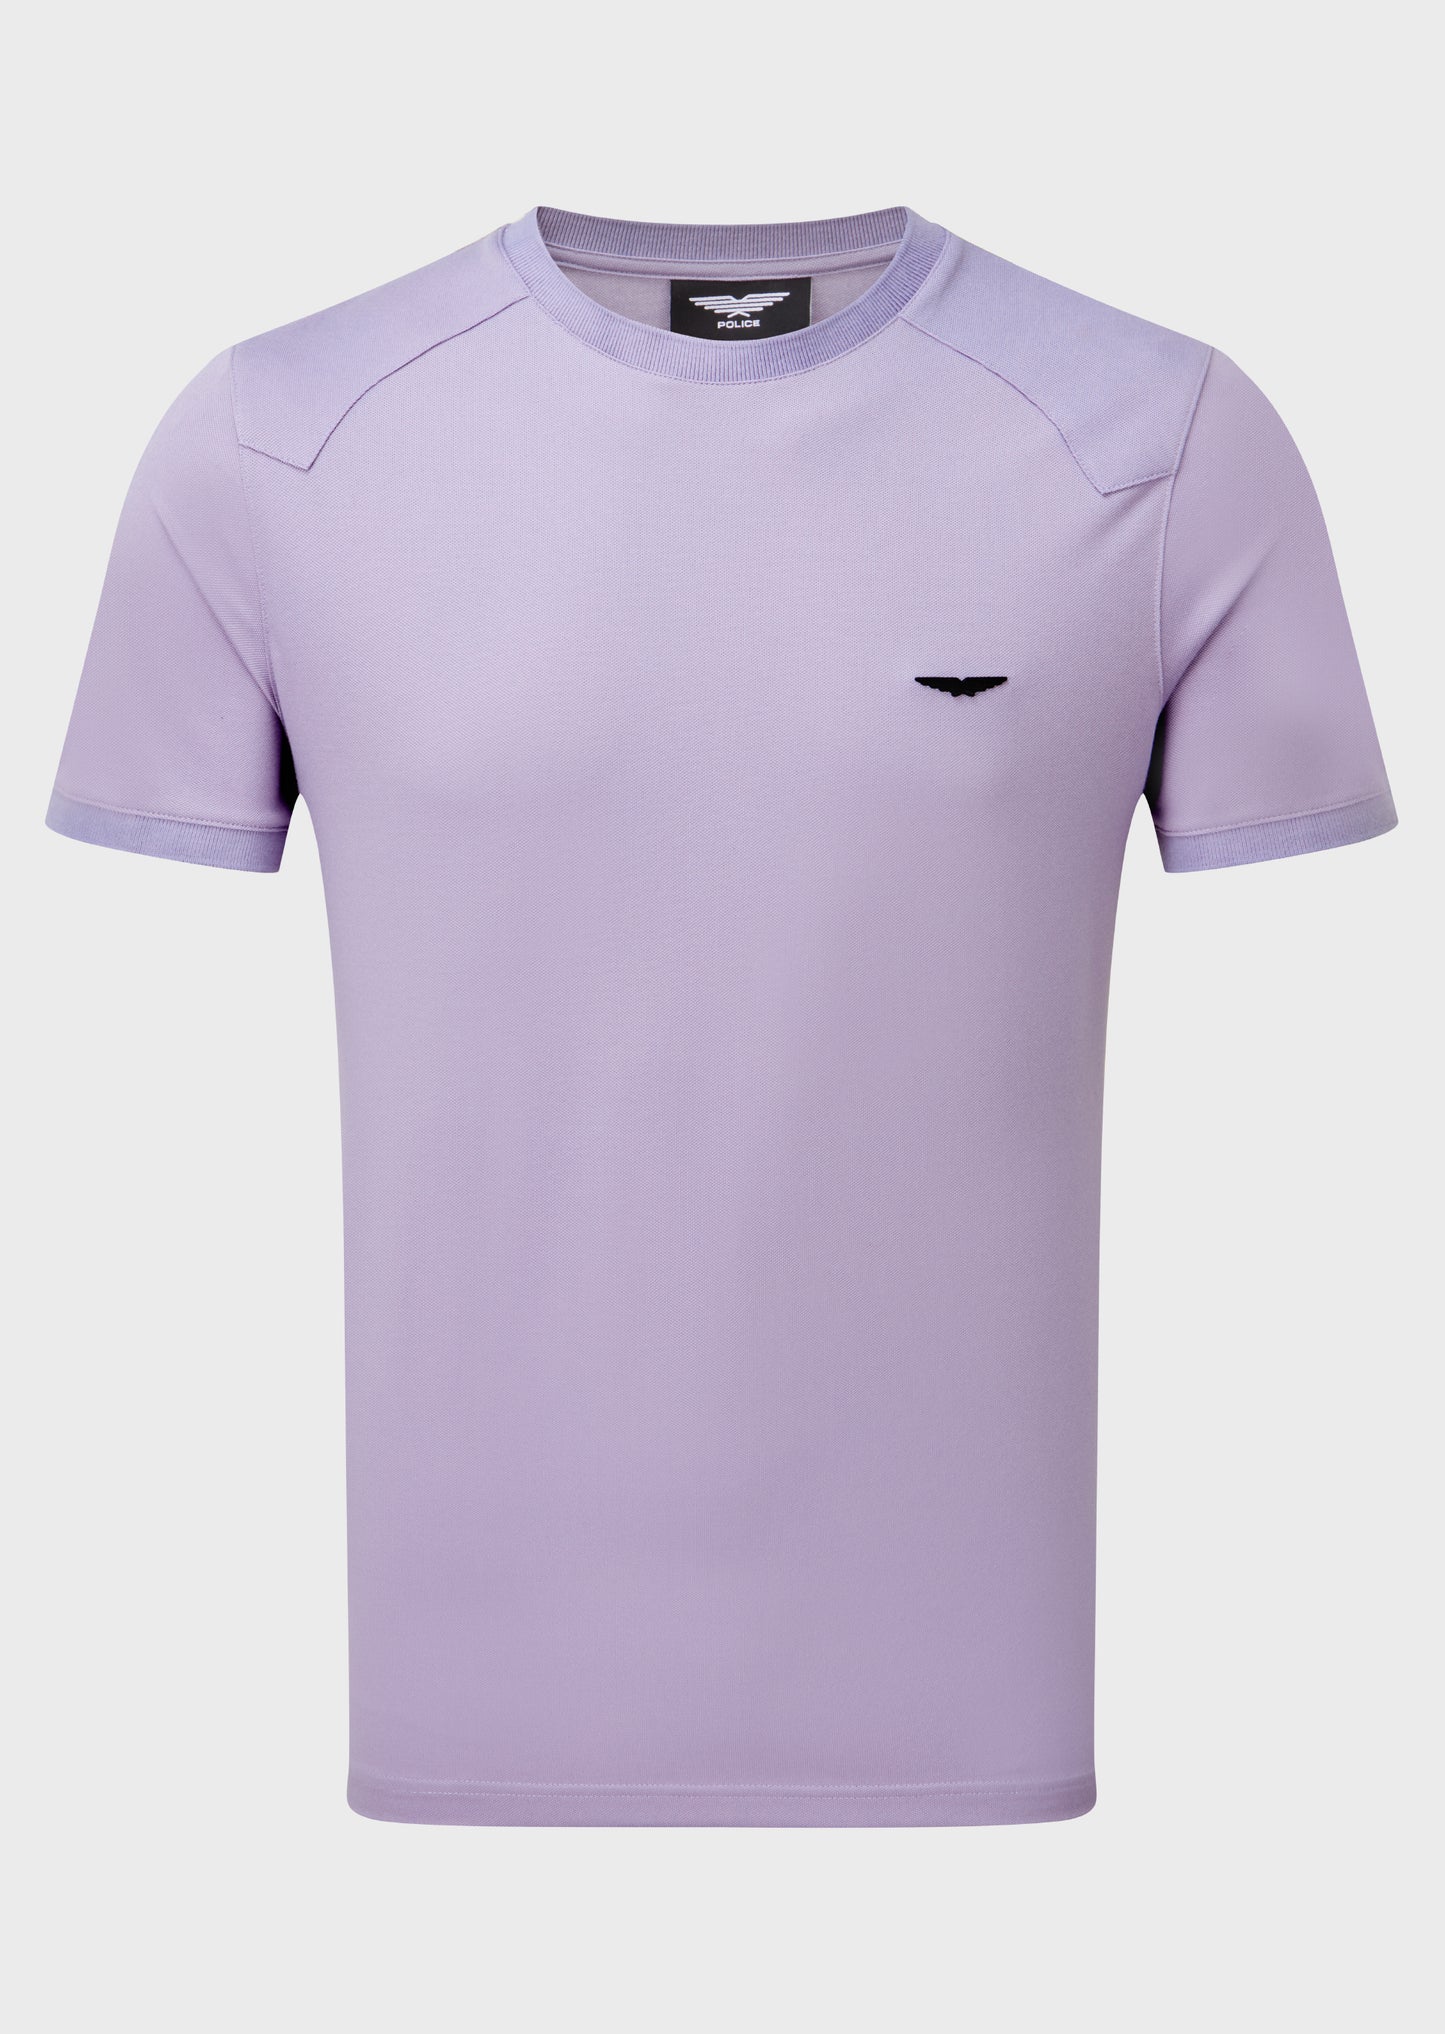 Perks Lavender T-Shirt